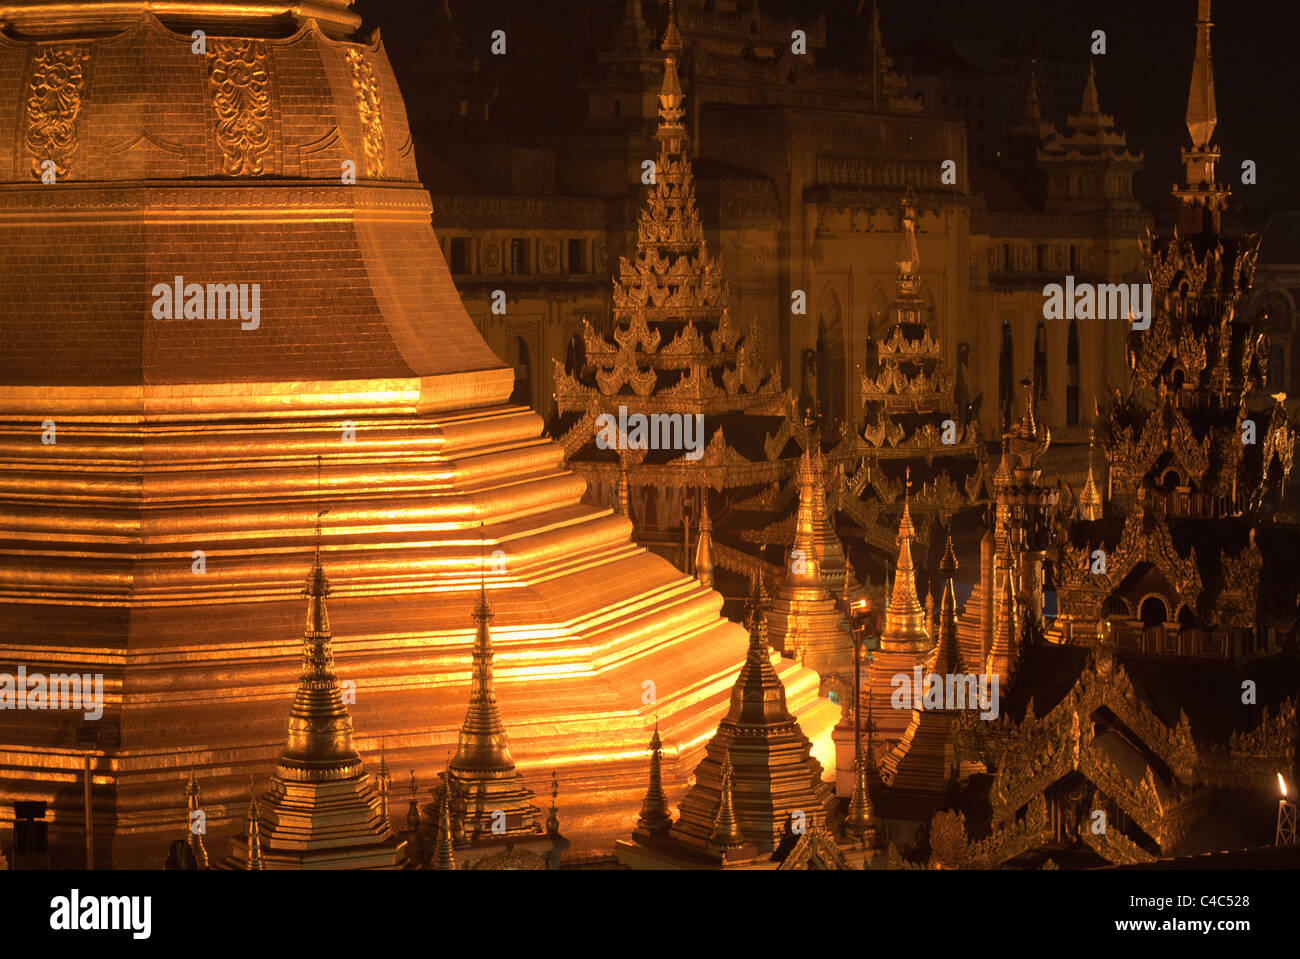 Sule Pagoda in central Yangon, Myanmar at night Stock Photo